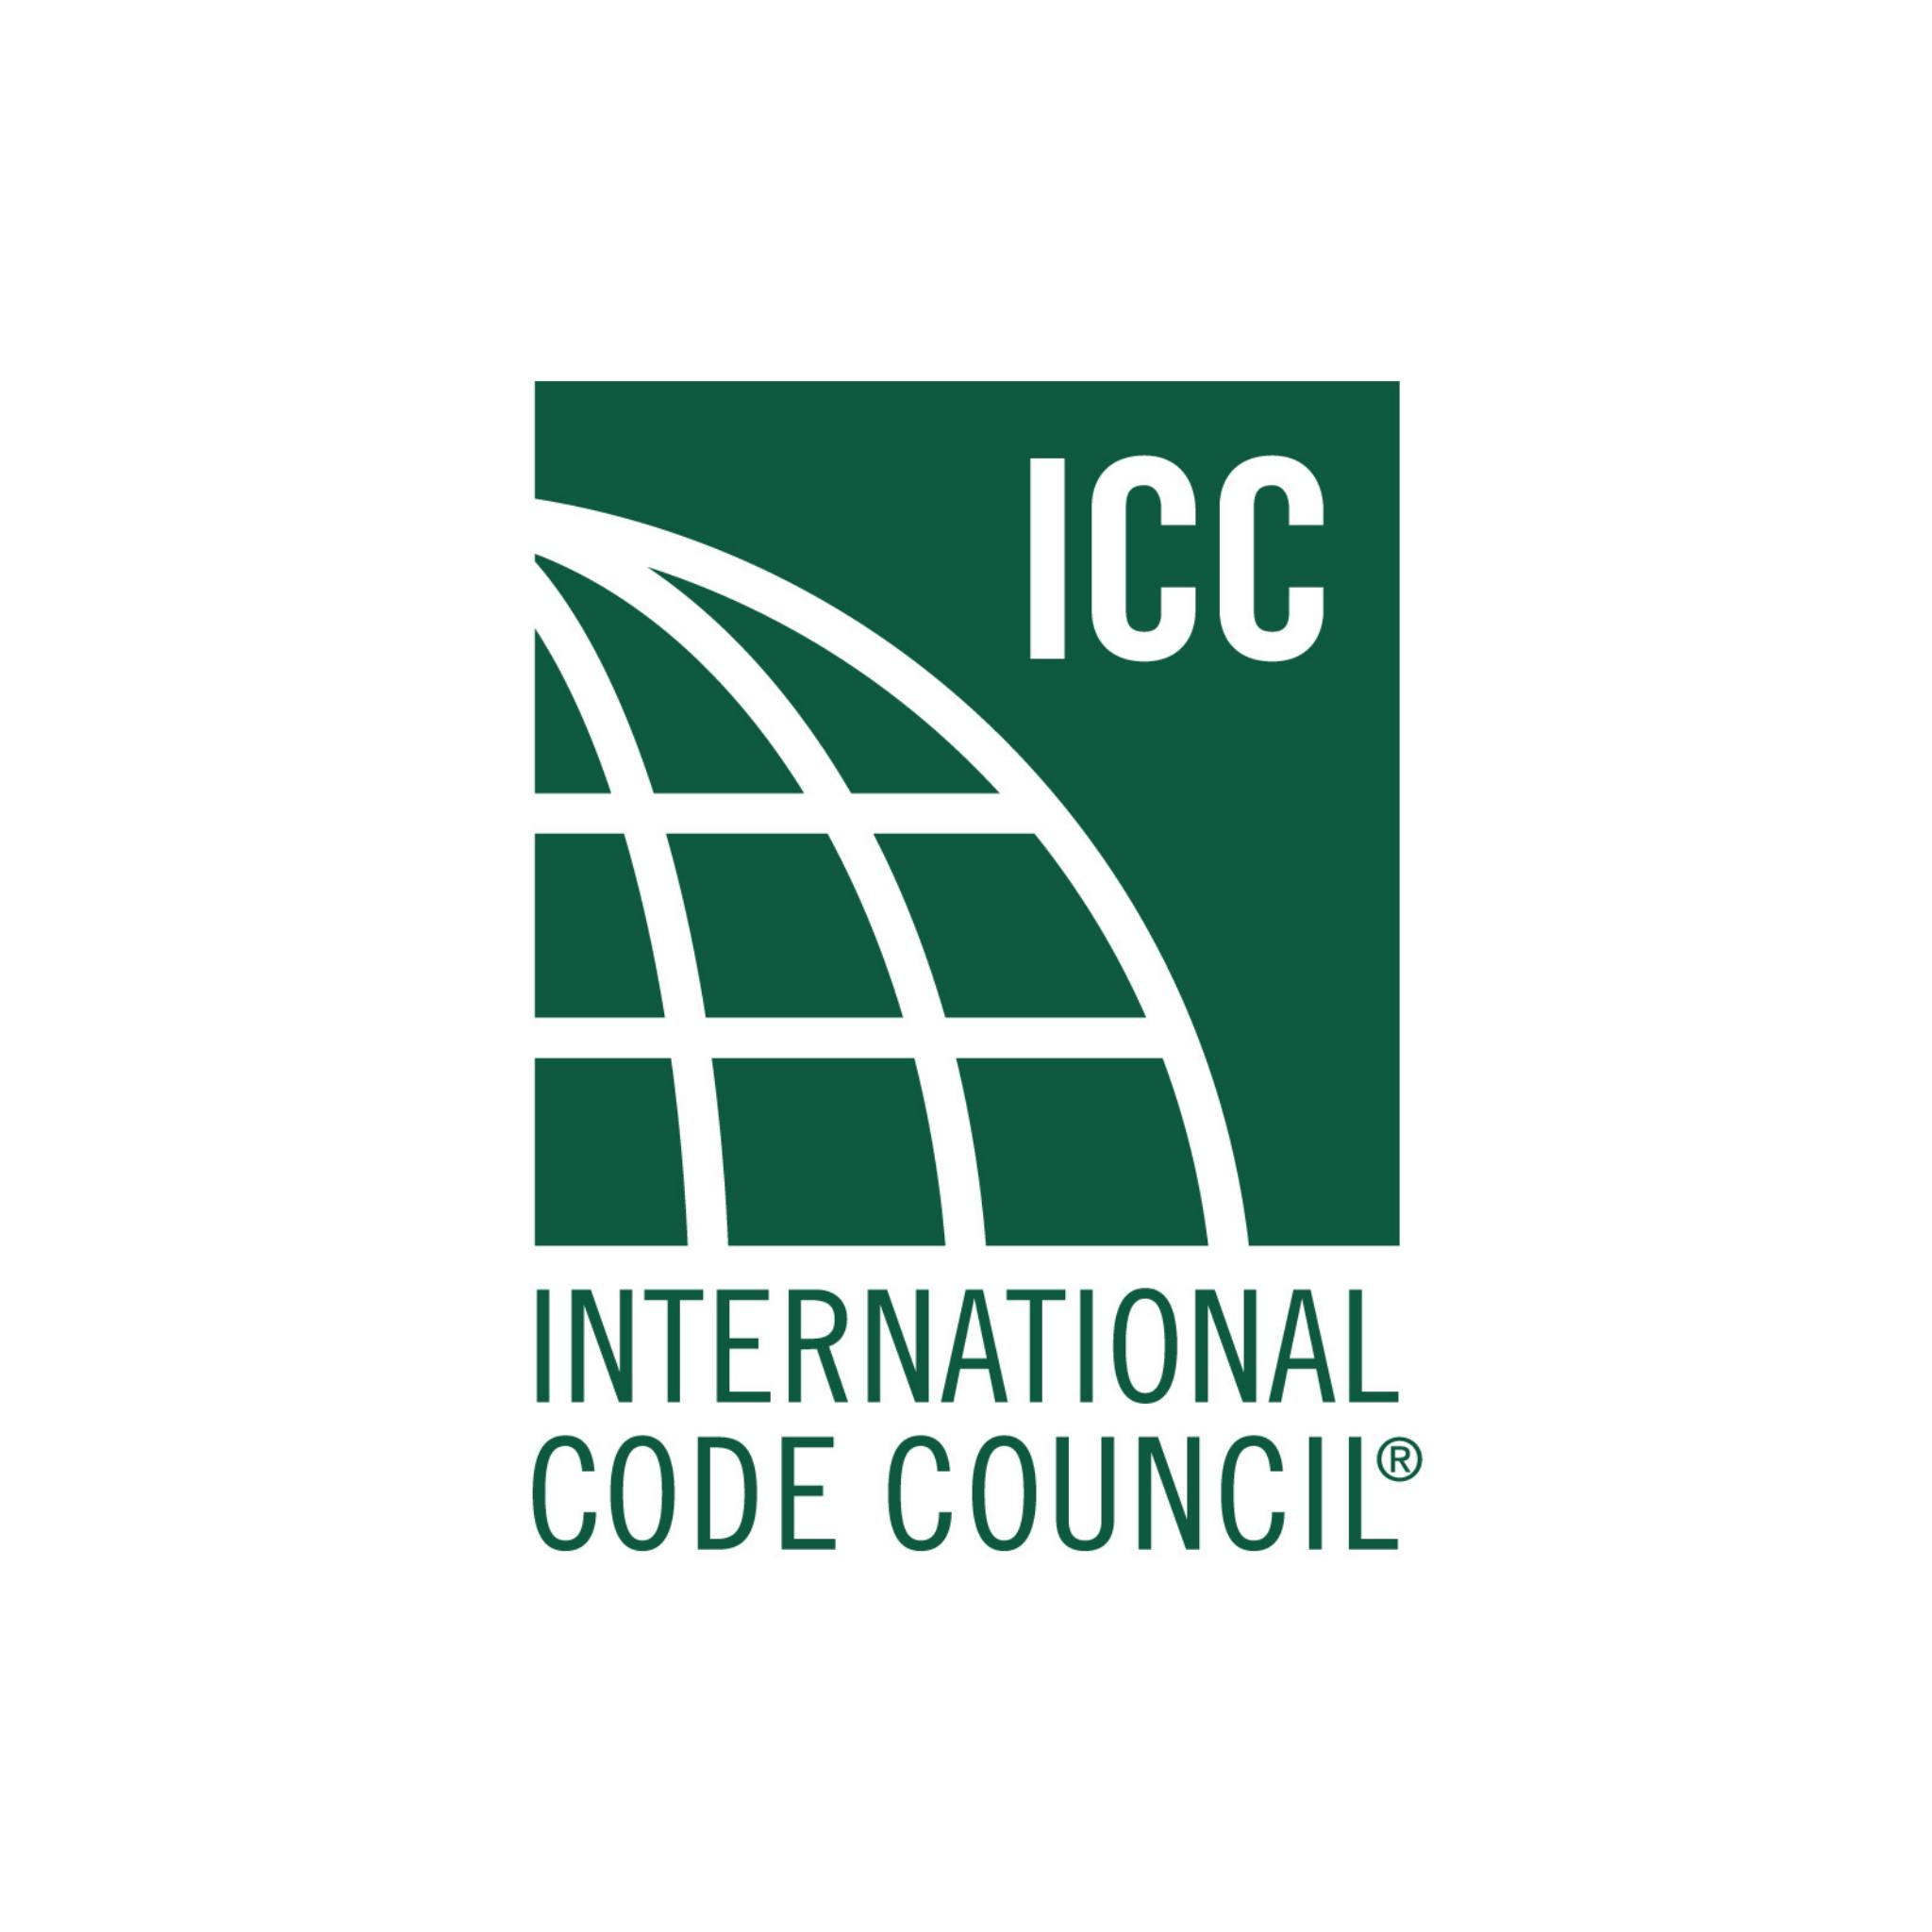 International Code Council Logo